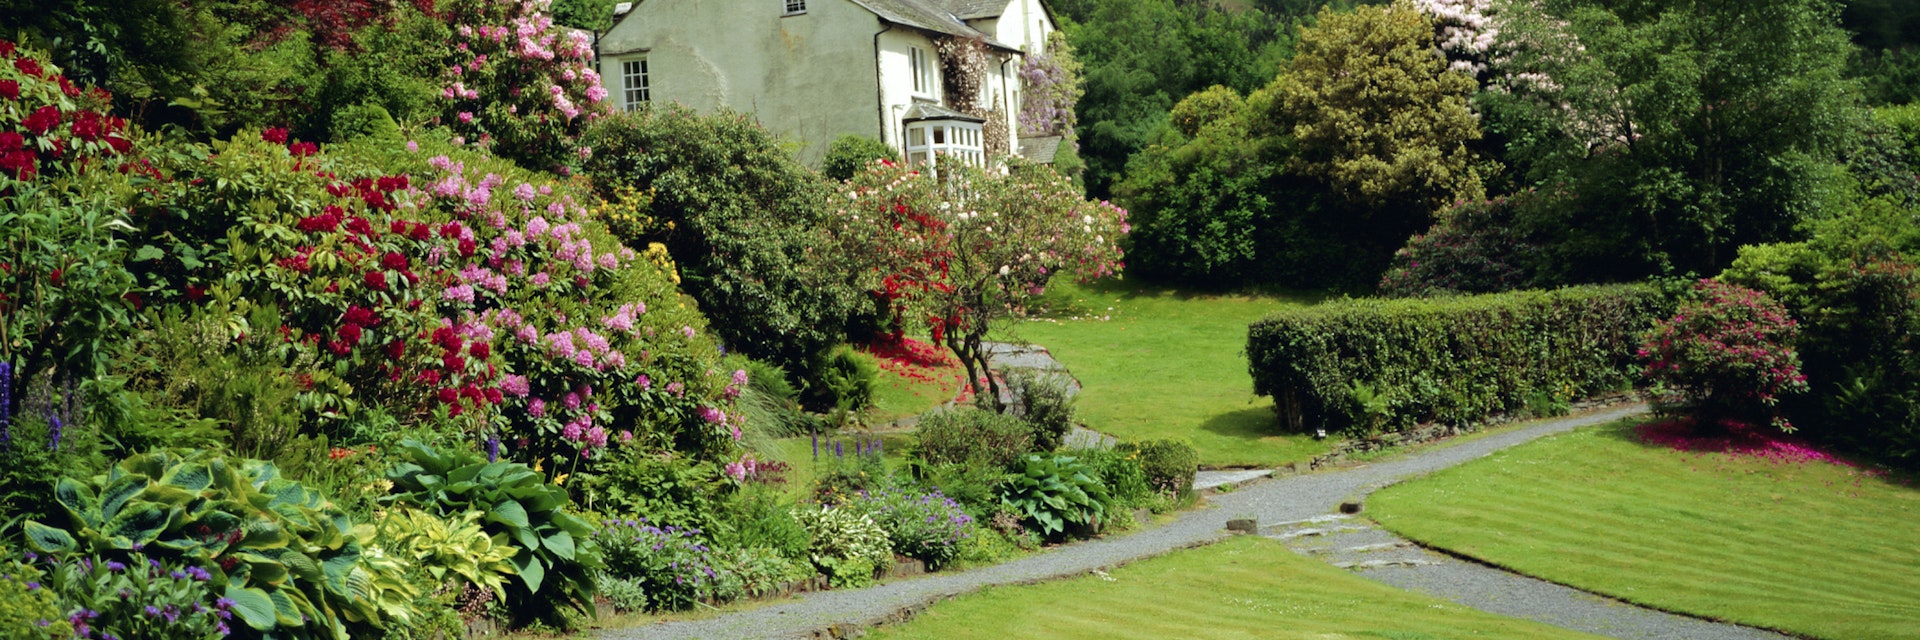 Rydal Mount, home of the poet William Wordsworth, Ambleside, Lake District, Cumbria, England, UK